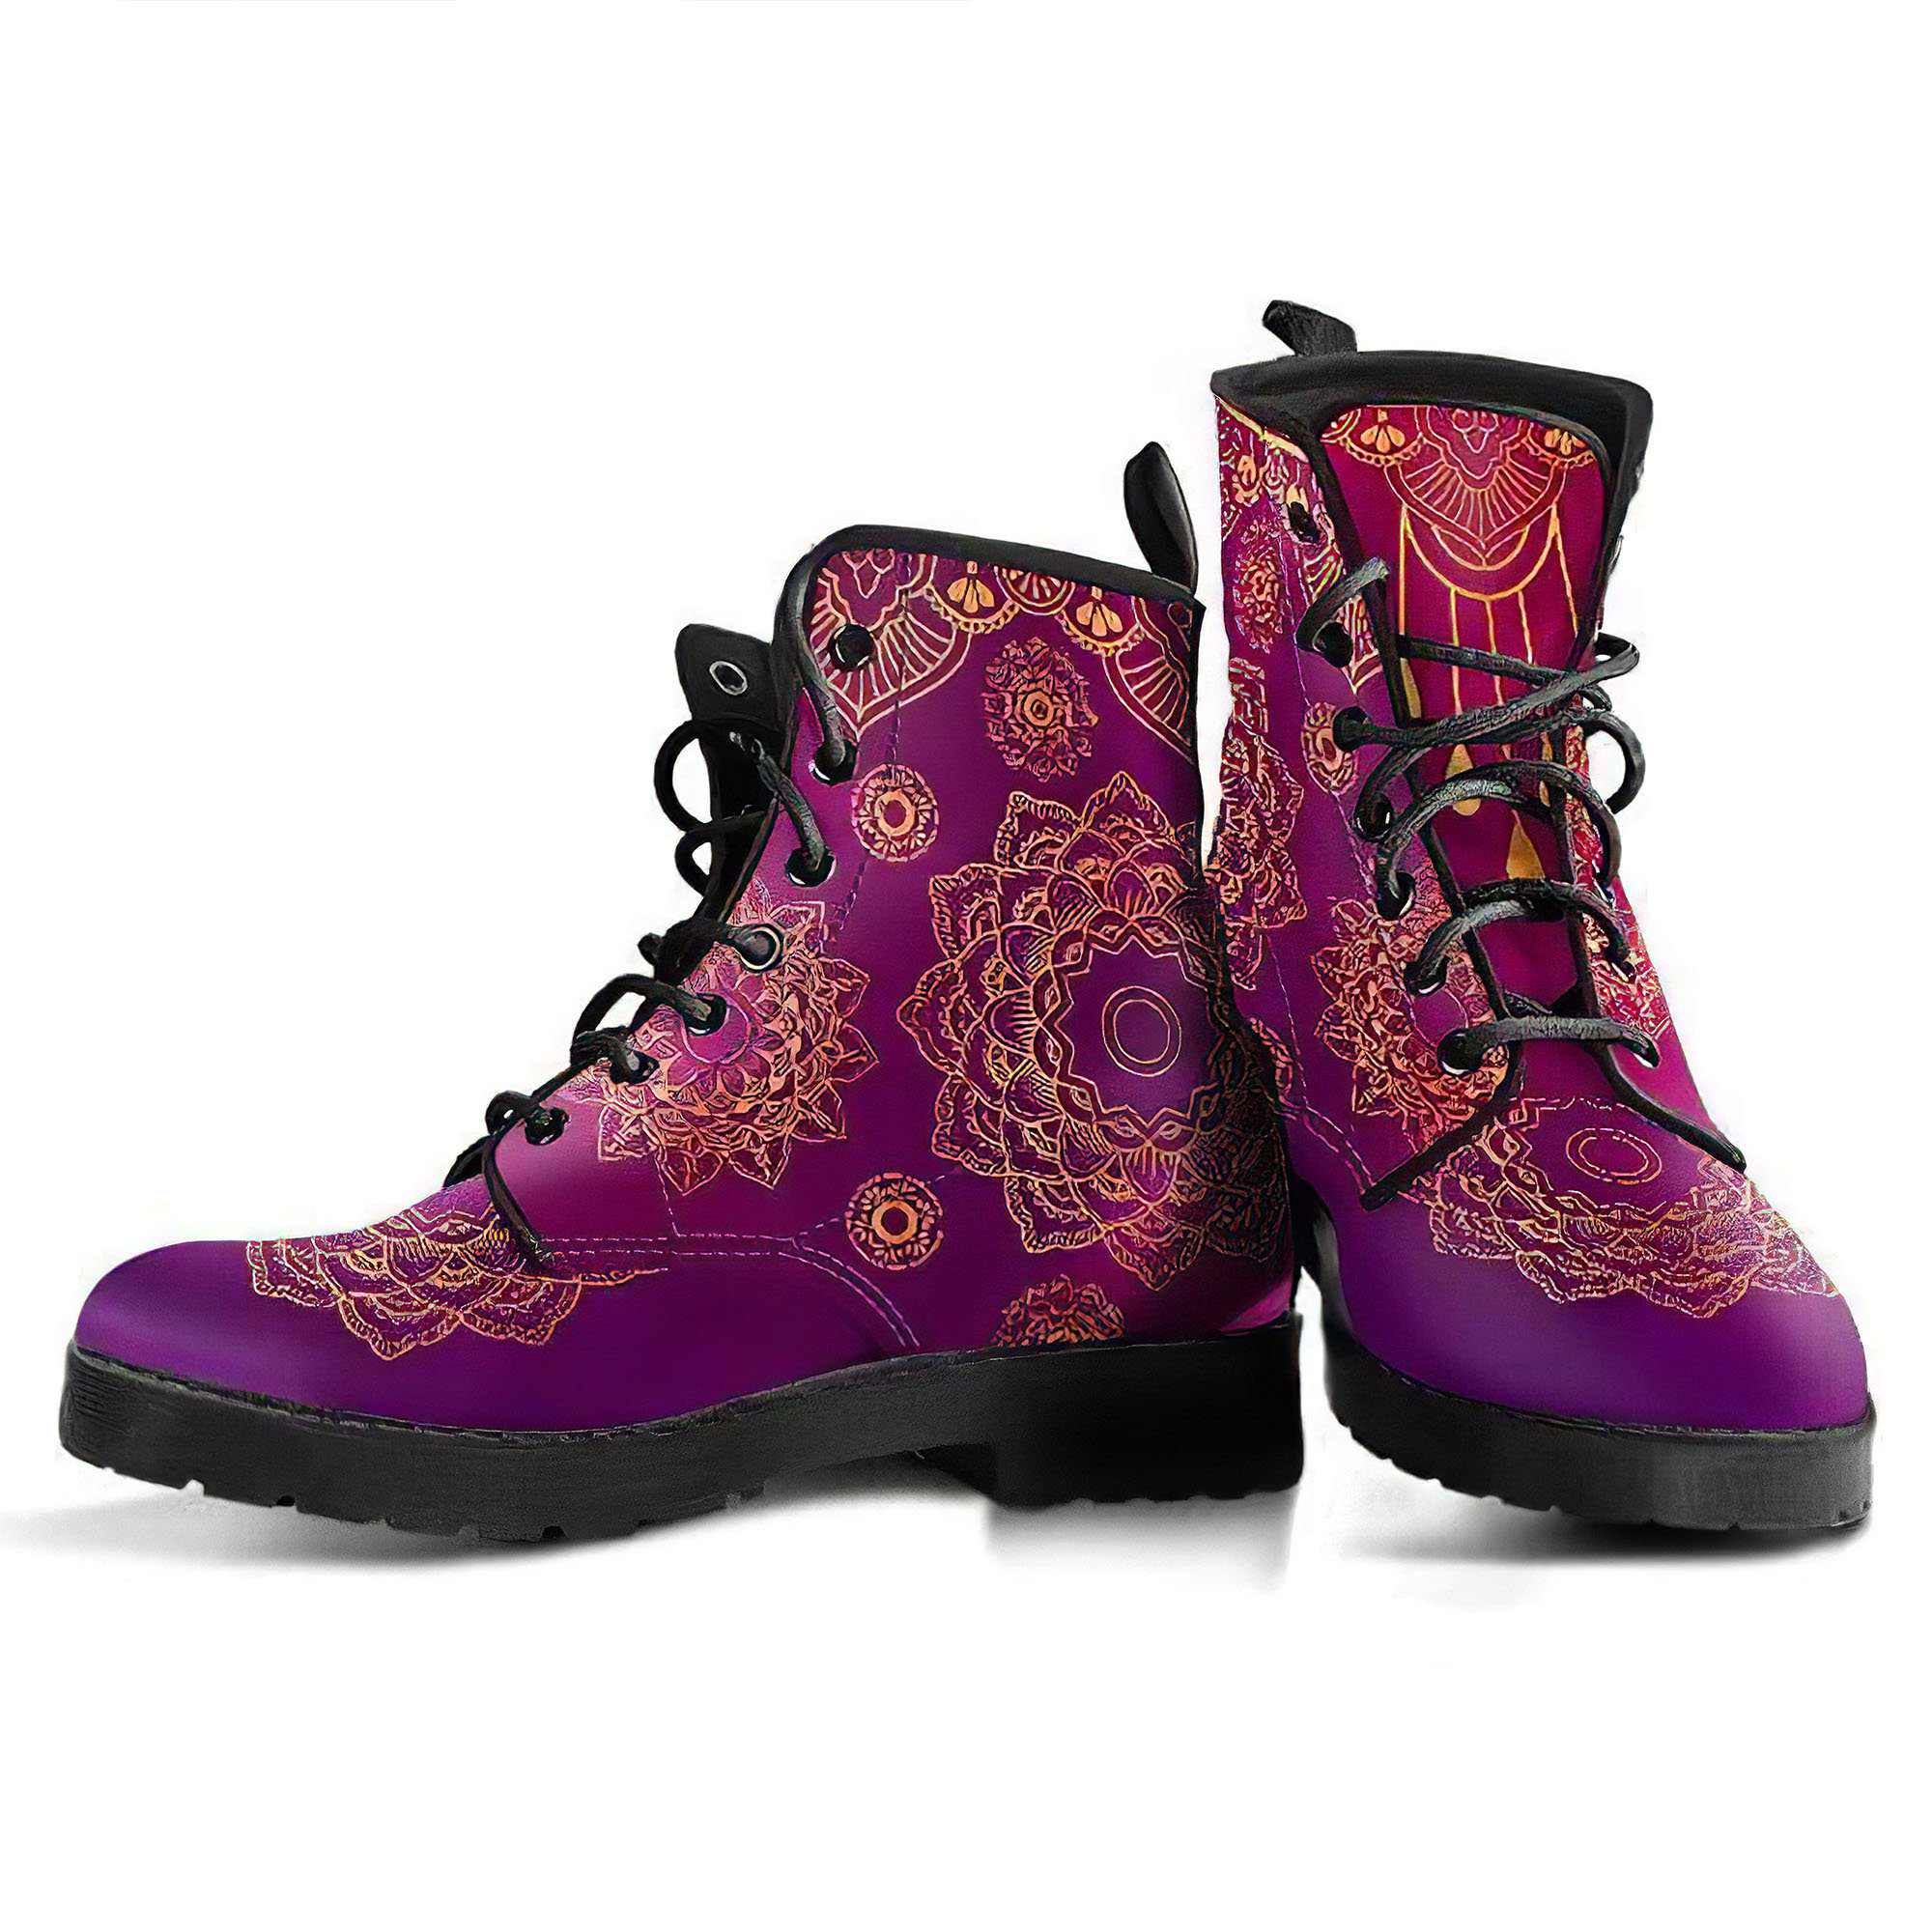 mandala-handcrafted-boots-limited-edition-gp-main.jpg